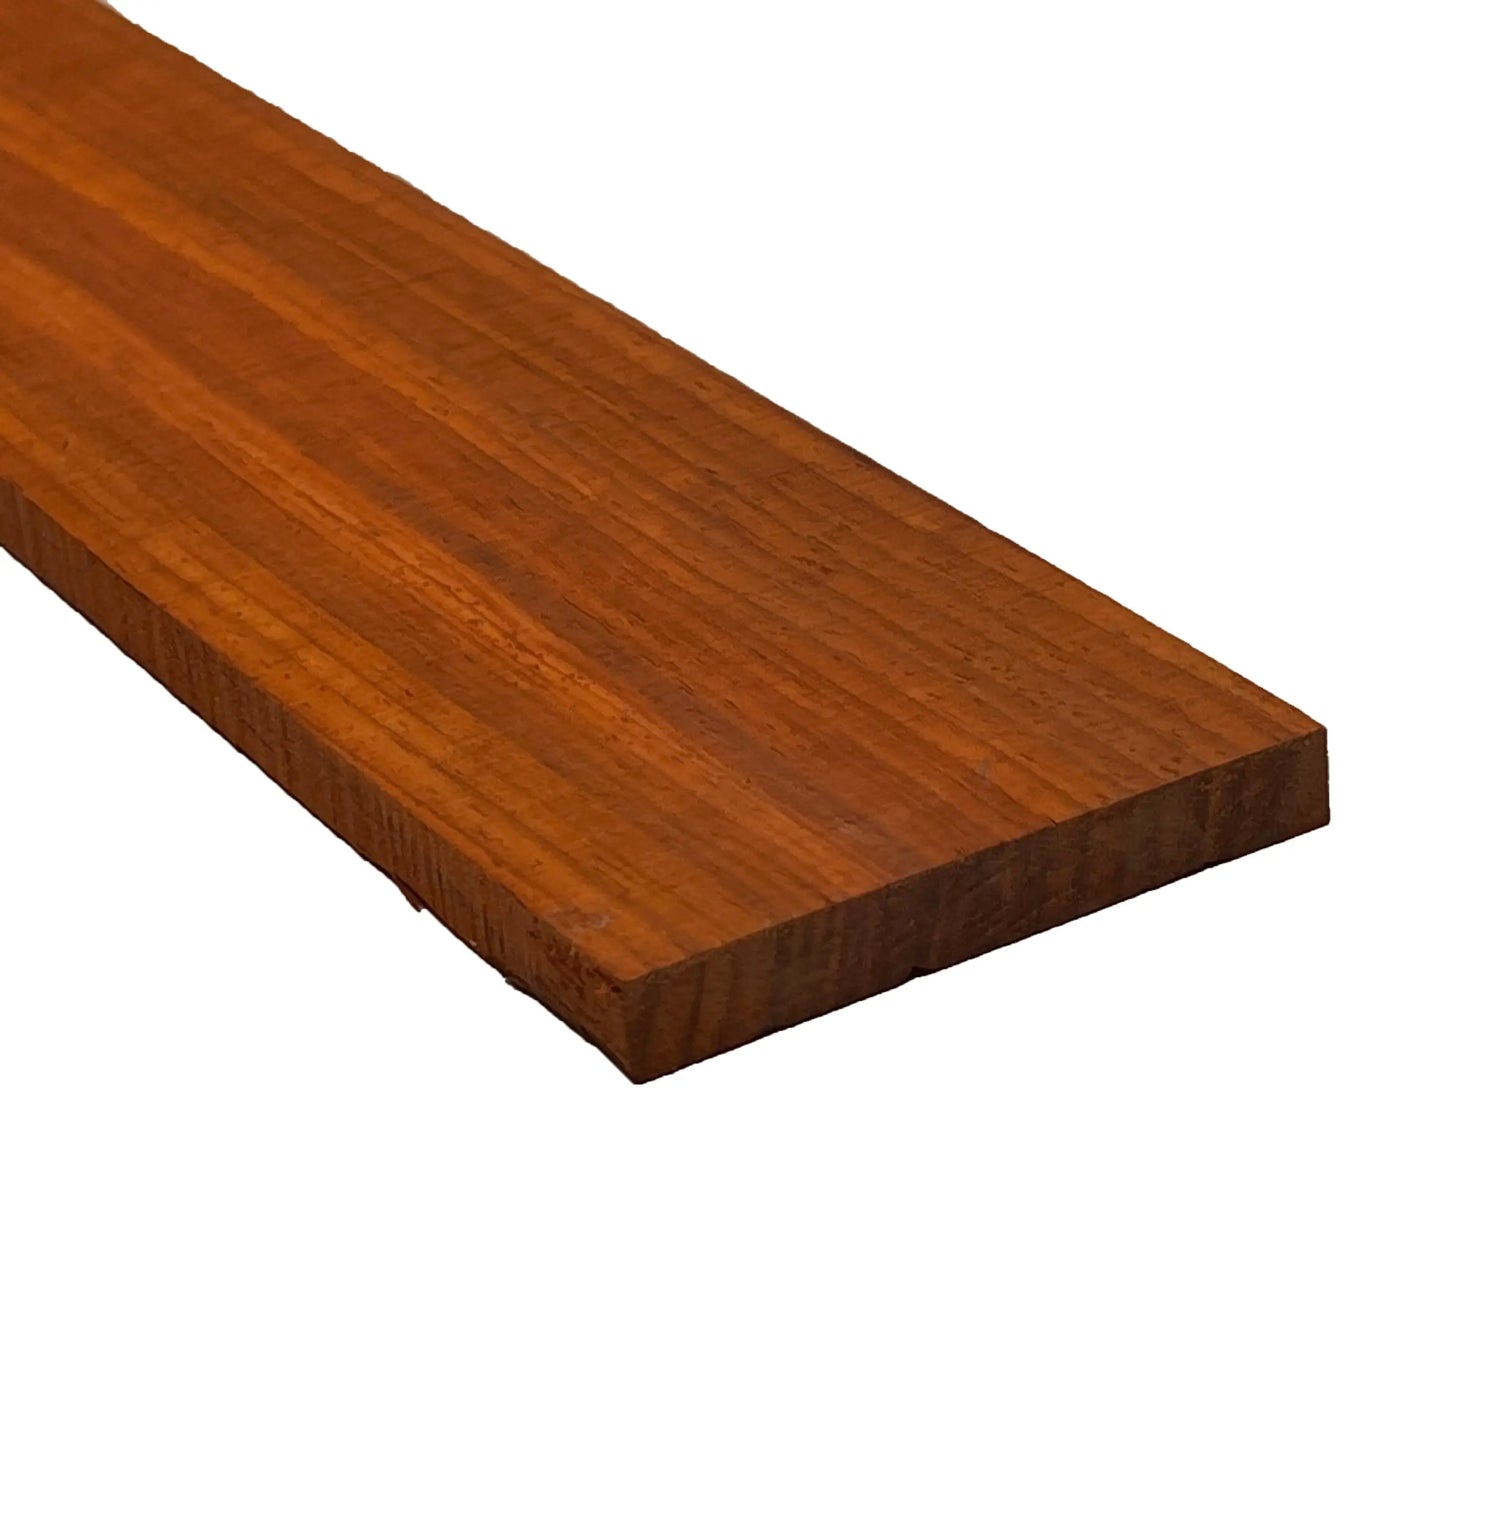 1/8 Thin Stock Lumber  Birdseye Maple, Curly Maple, Tiger Maple, Exotic  Wood